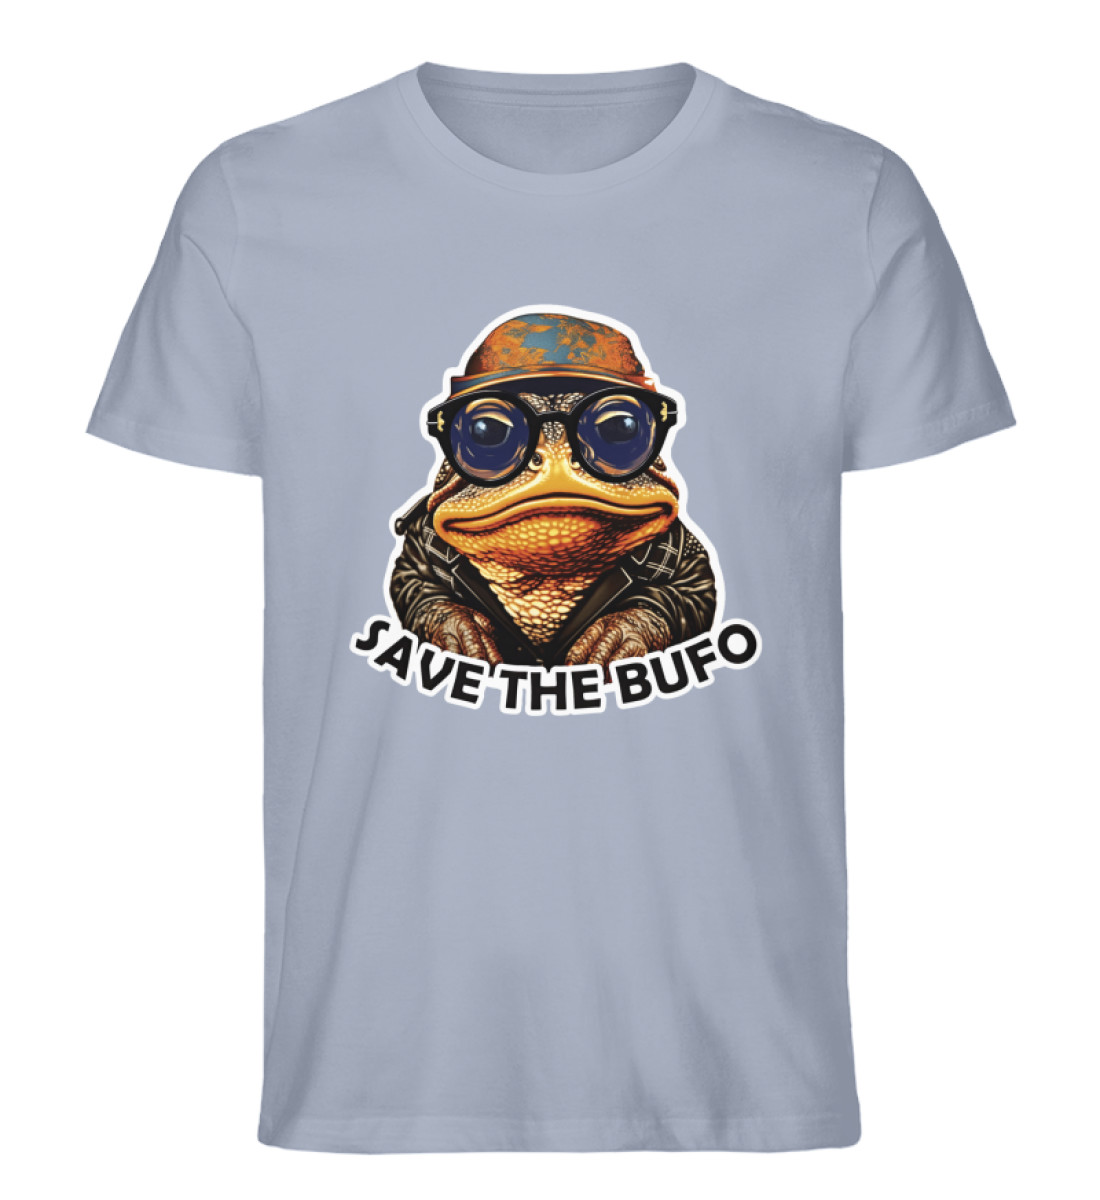 Save The Bufo! 5-MeO-DMT - Premium Organic T-Shirt - Men Premium Organic Shirt-7086